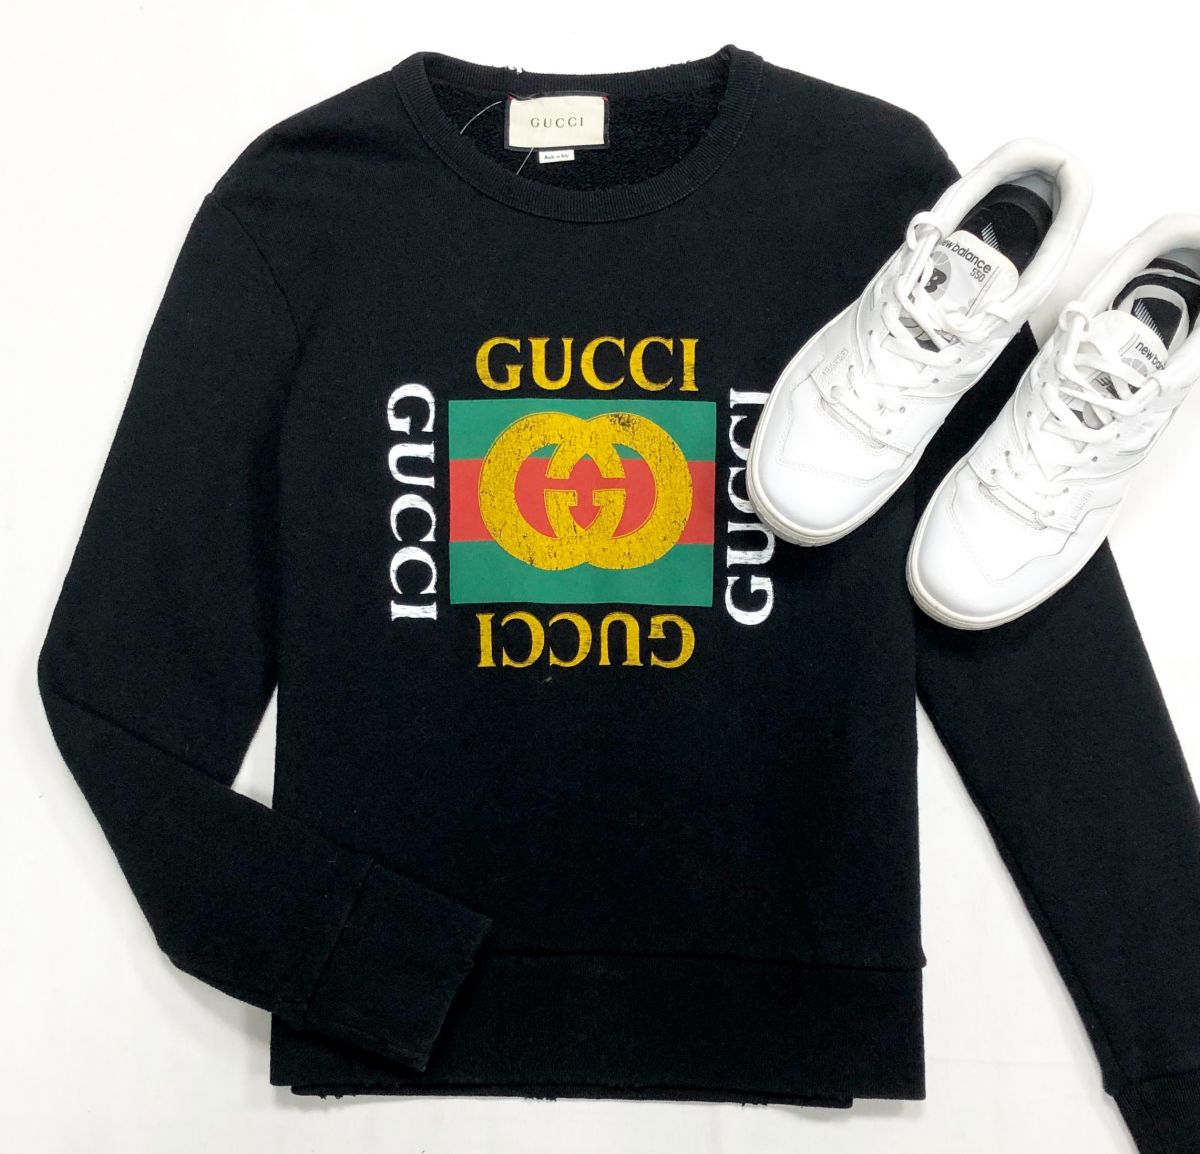 Толстовка Gucci размер XS цена 38 463 рубКеды New Balance размер 40.5 цена 9 231 руб